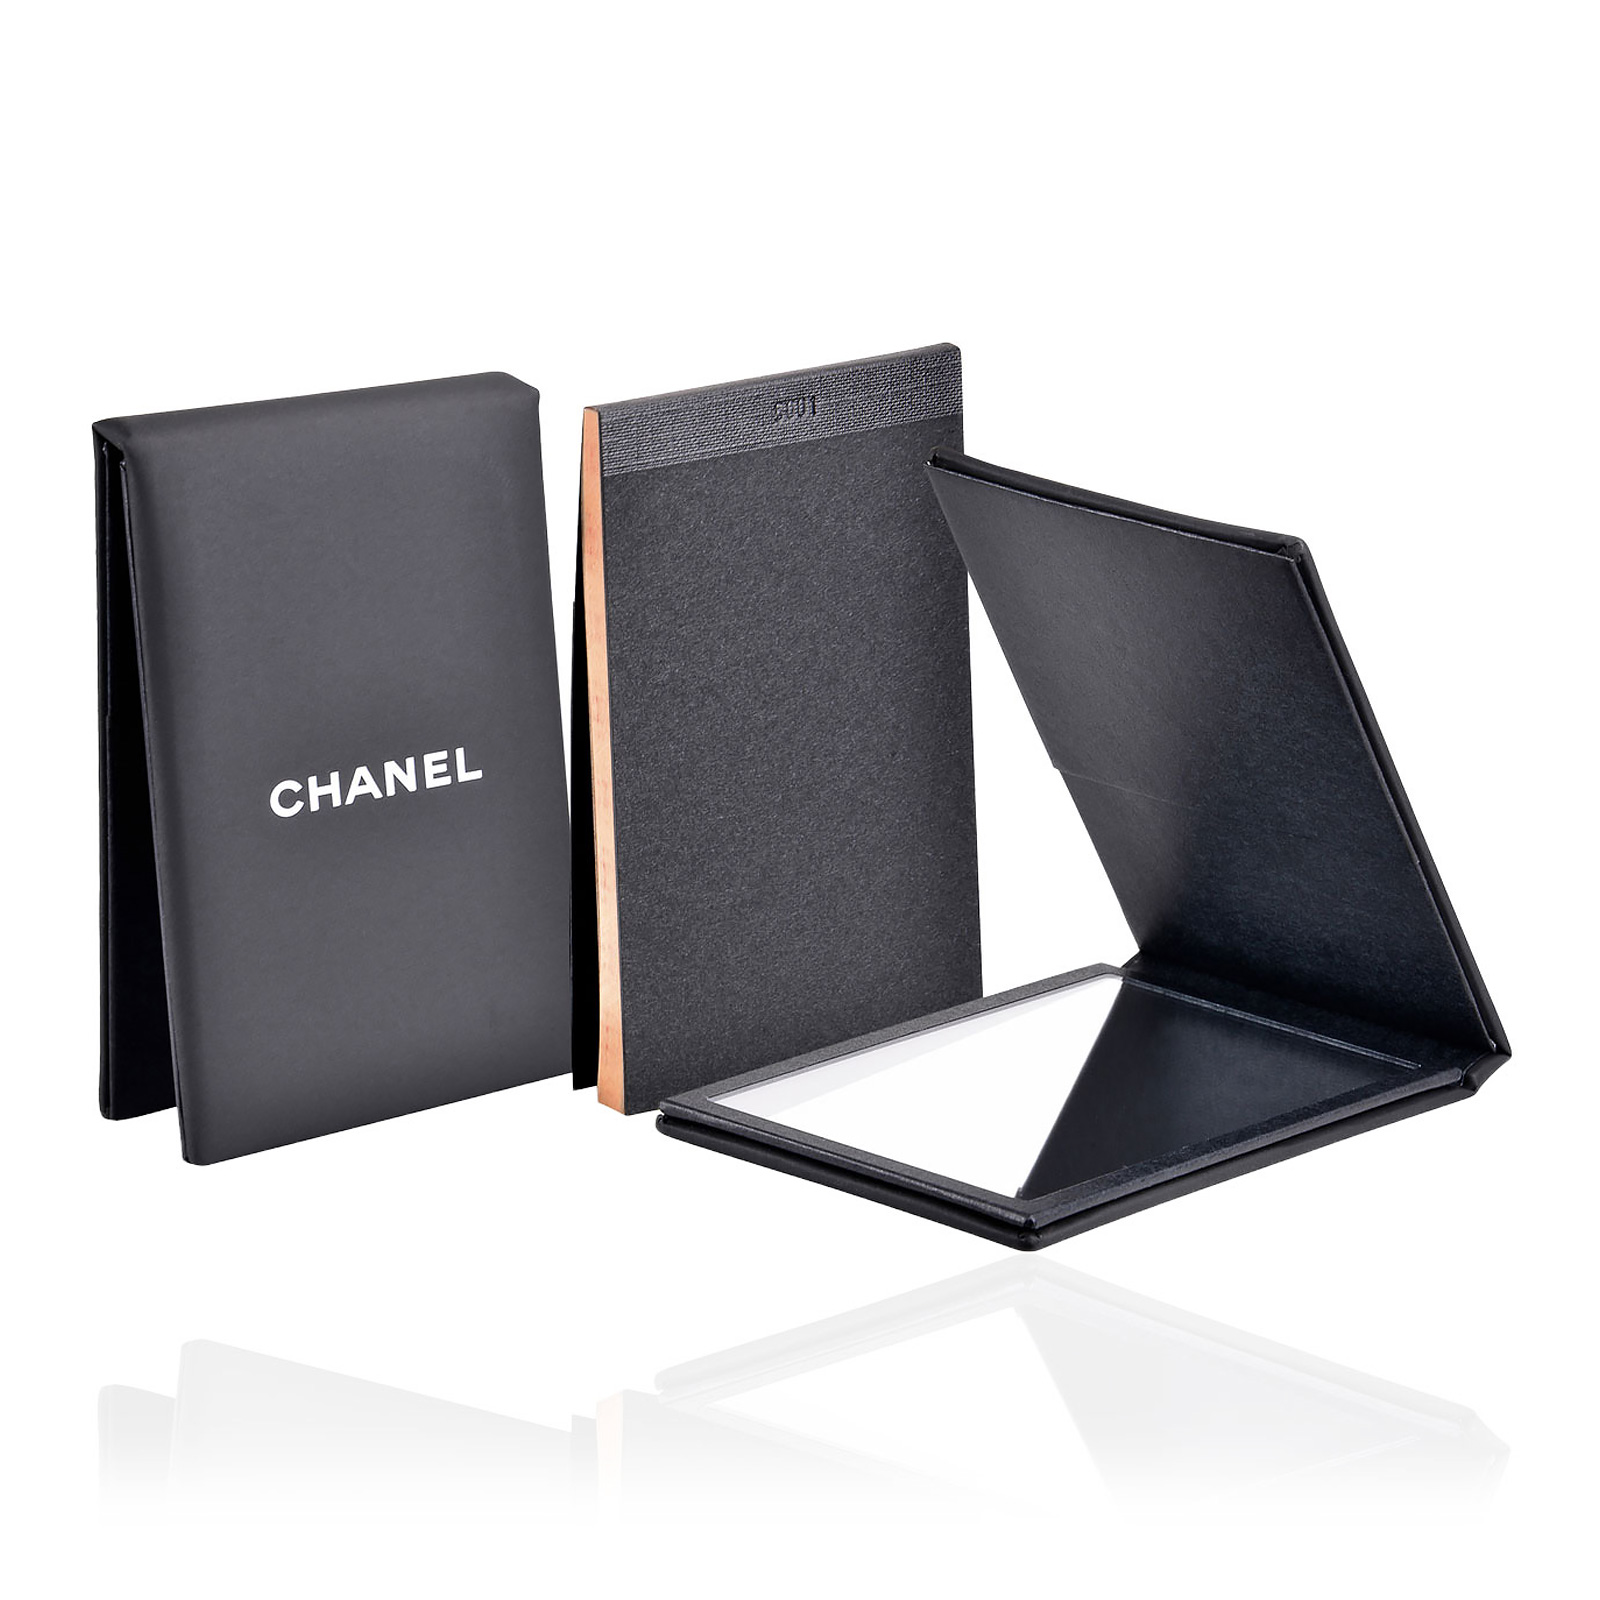 Chanel Papier Matifiant De Chanel Blotting Papers150 sheets AKB Beauty